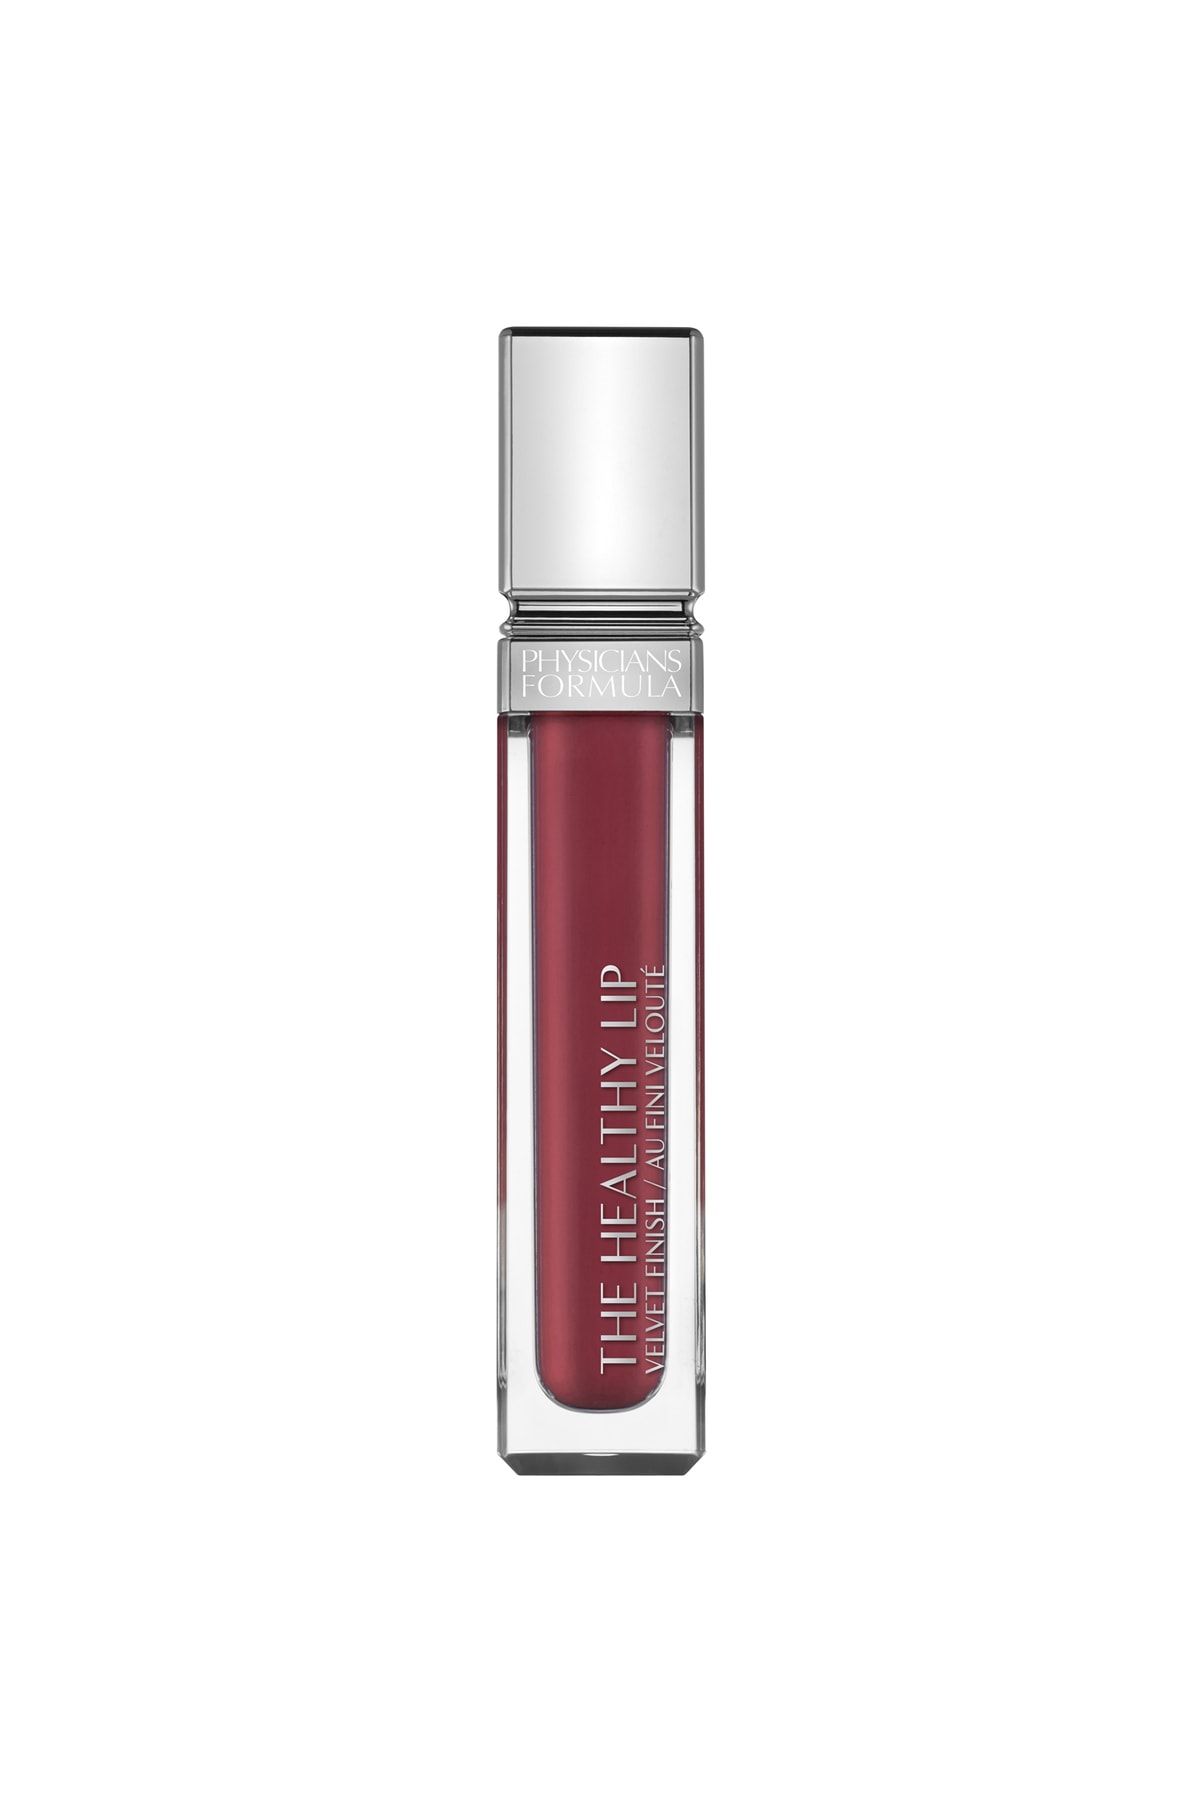 Physicians Formula The Healthy Lip Velvet Finish Liquid Lipstick Ruj Berry Healthy